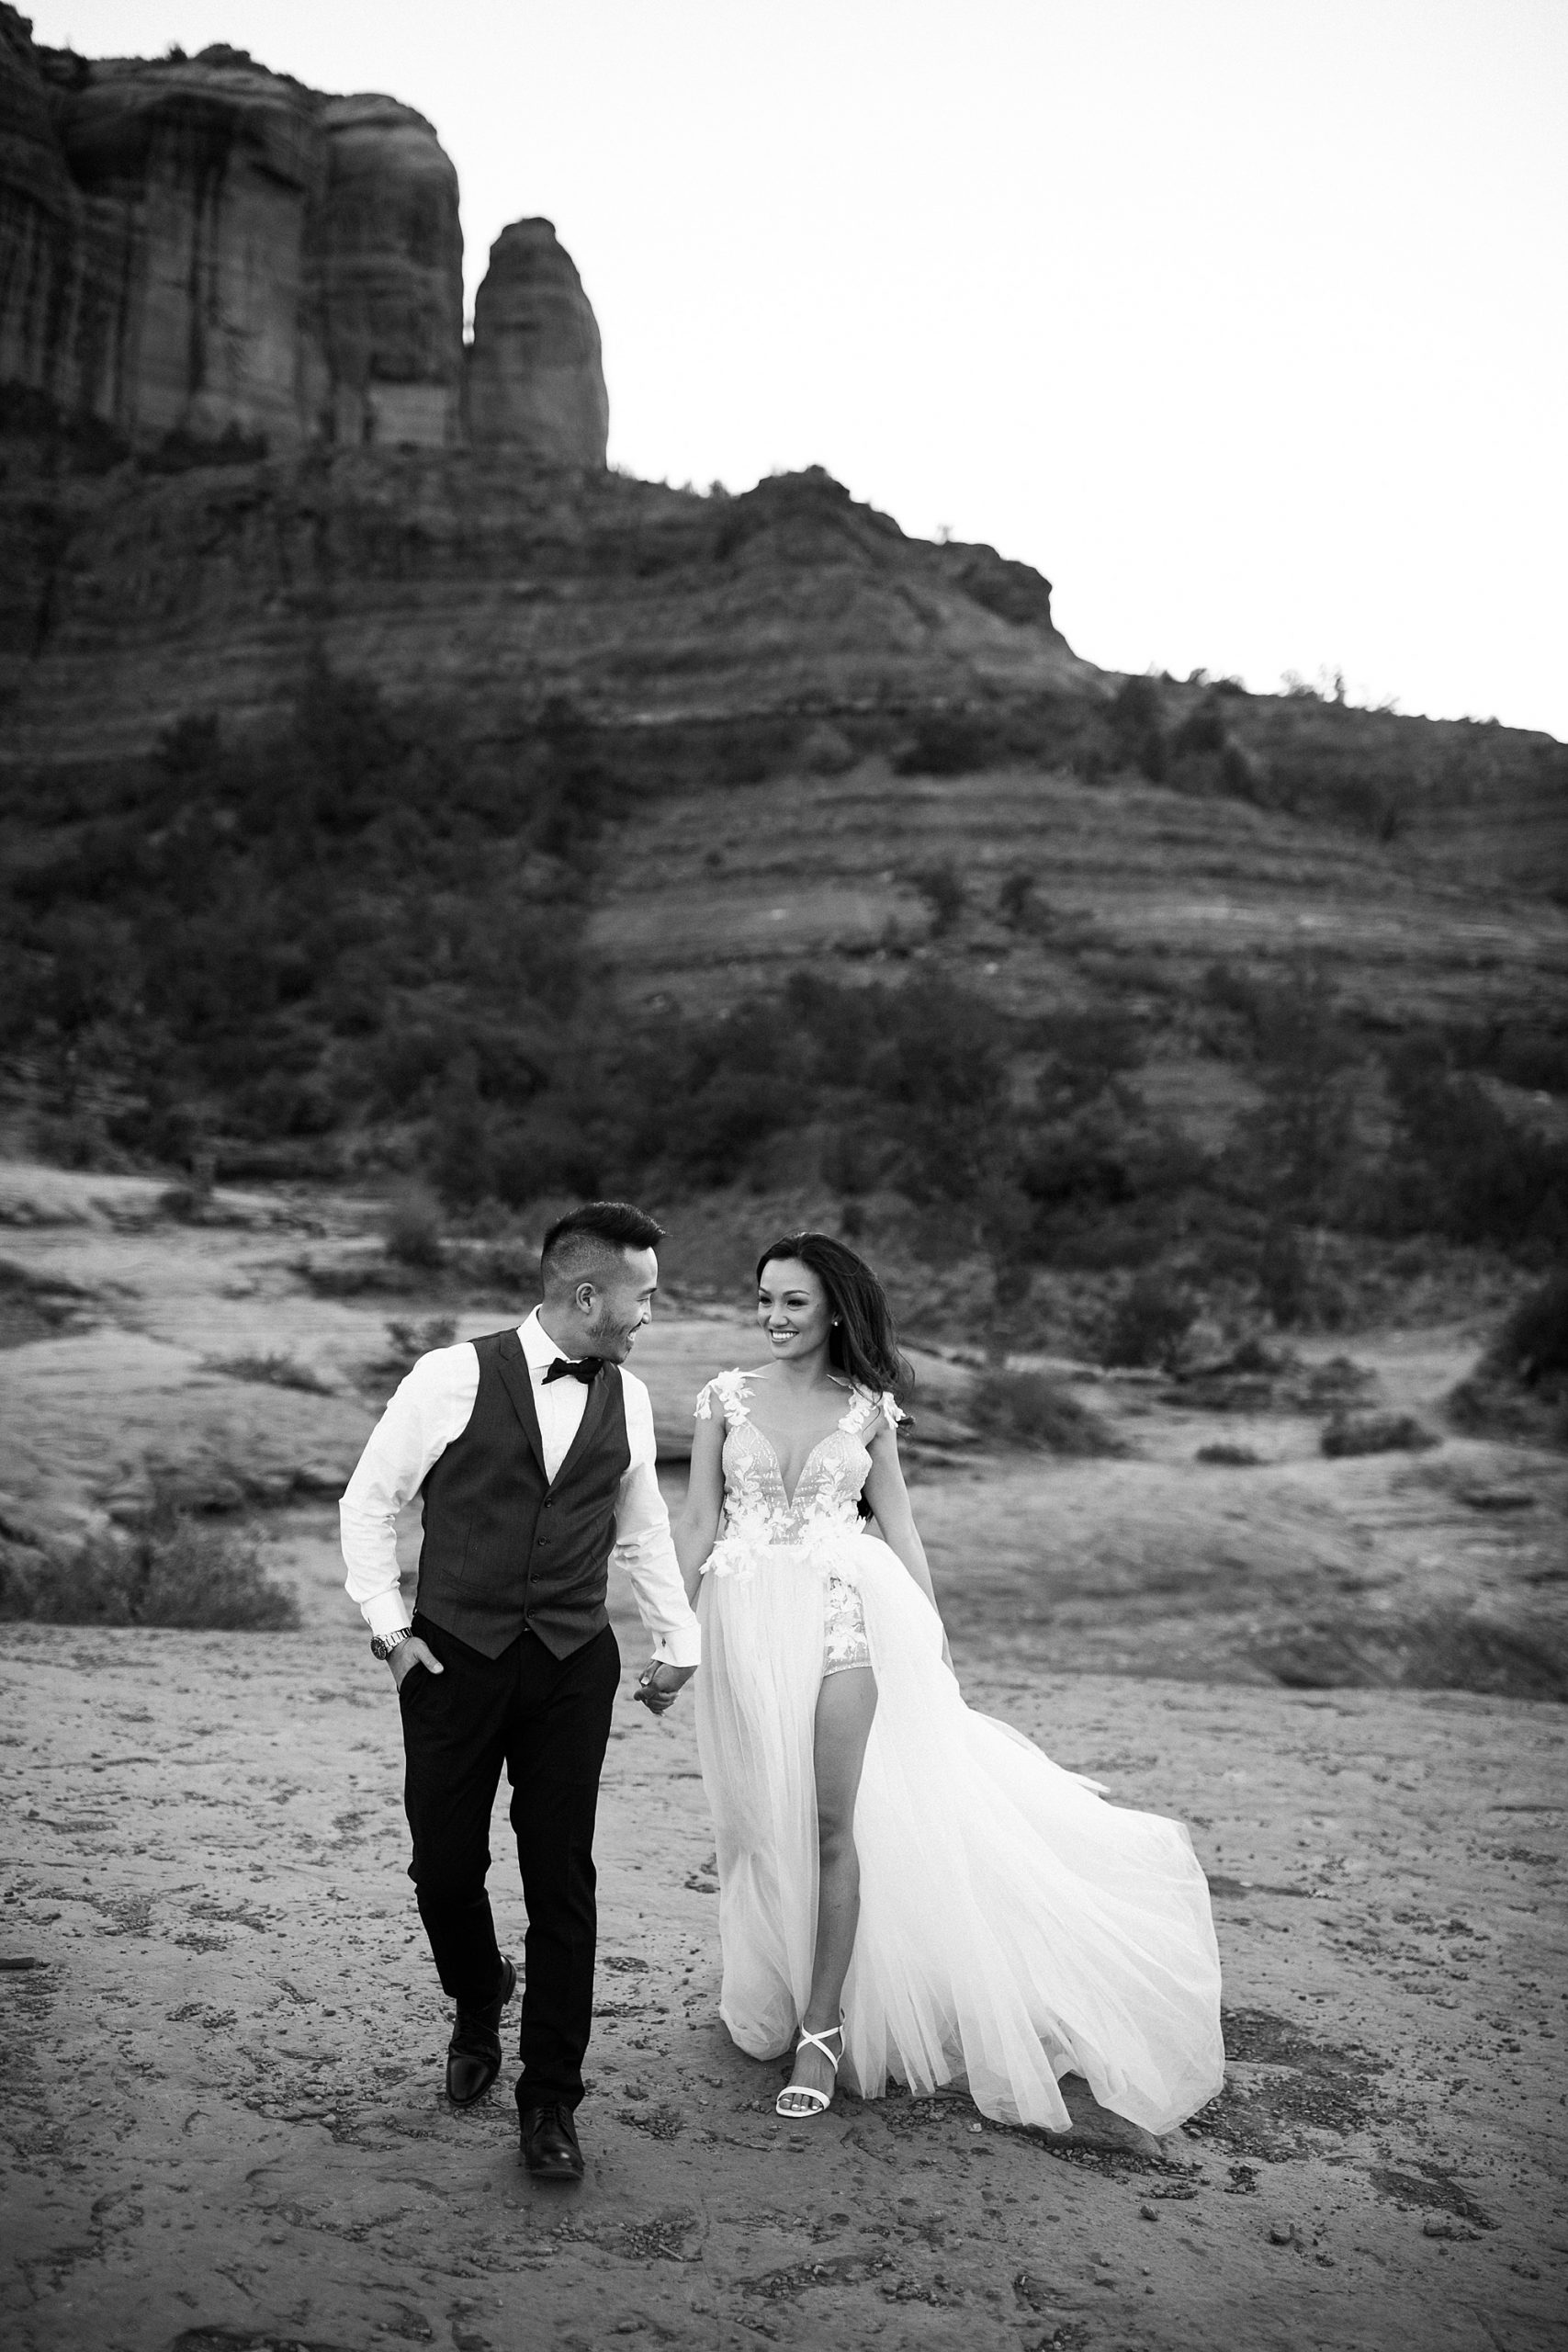 Sedona Arizona Elopement, desert elopement, red rock elopement, Cathedral Rock elopement, intimate wedding in Sedona Arizona, Sedona Arizona elopement photographer, Arizona elopement photographer